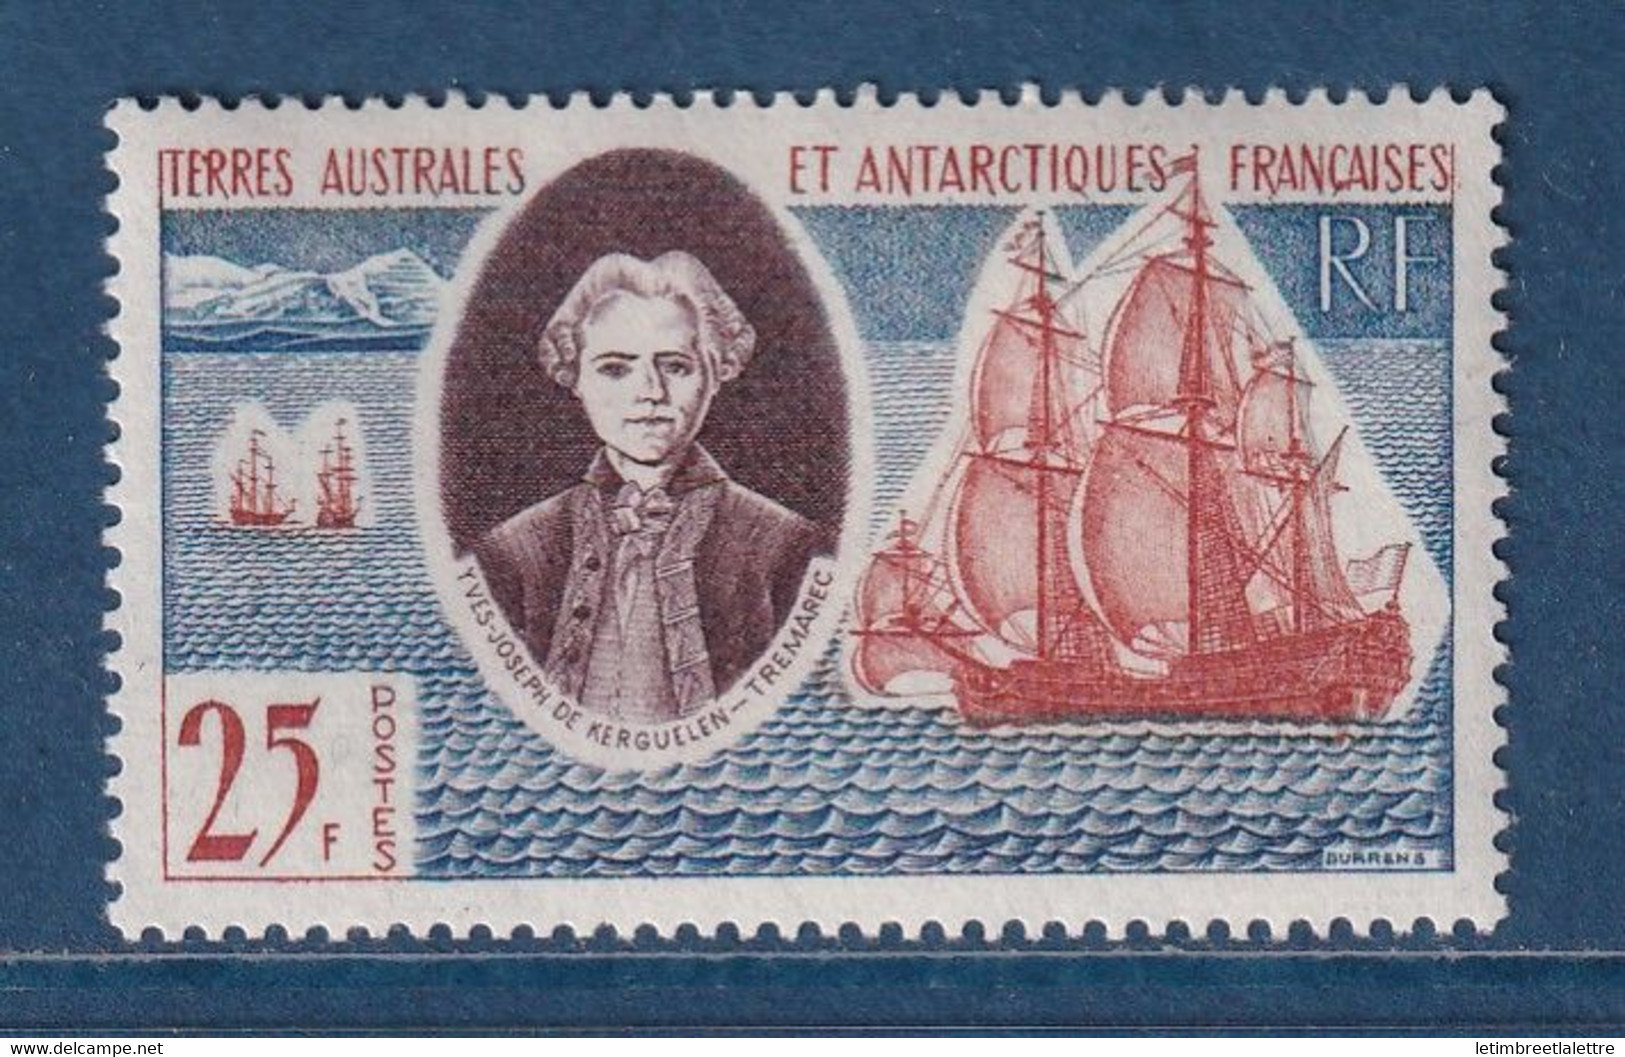 TAAF - YT N° 18 ** - Neuf Sans Charnière - 1959 - Unused Stamps